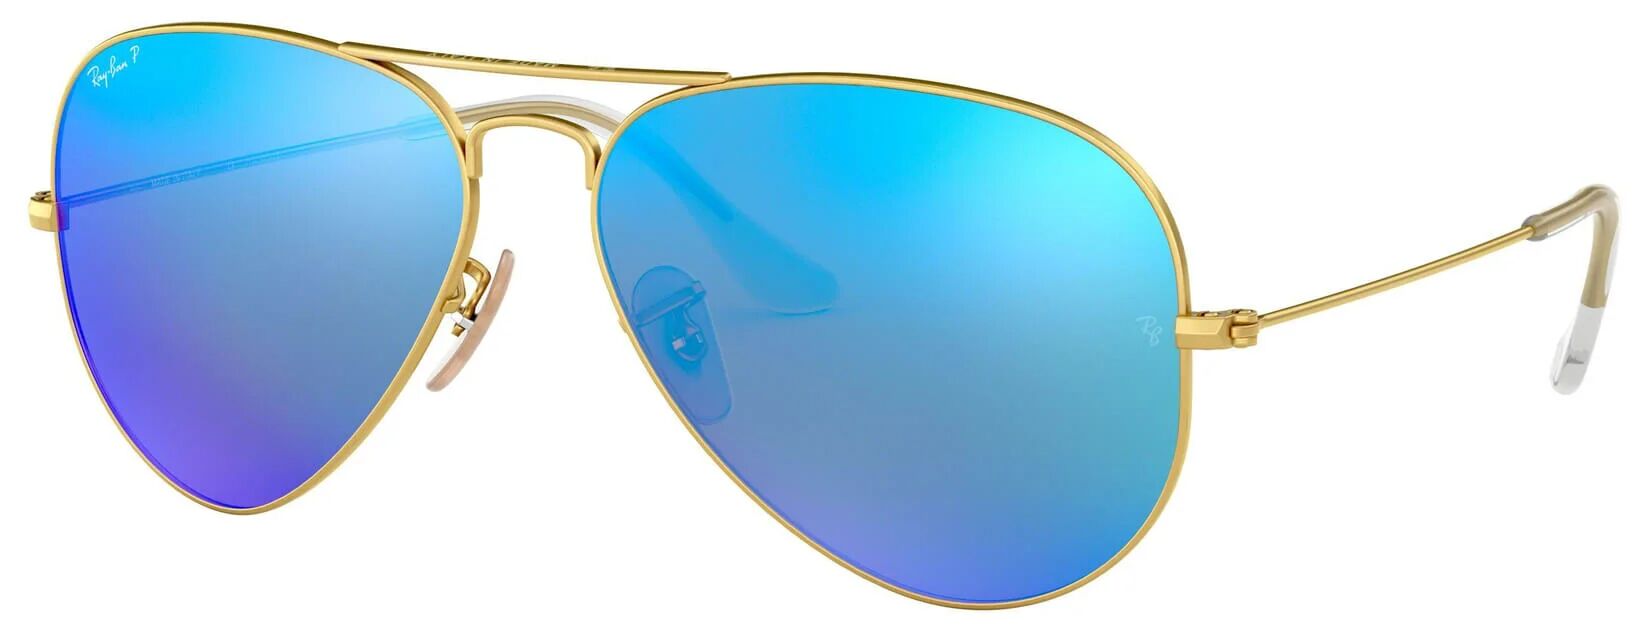 Ray-Ban Aviator Flash Matte Gold Sunglasses - Polarized Blue Lens